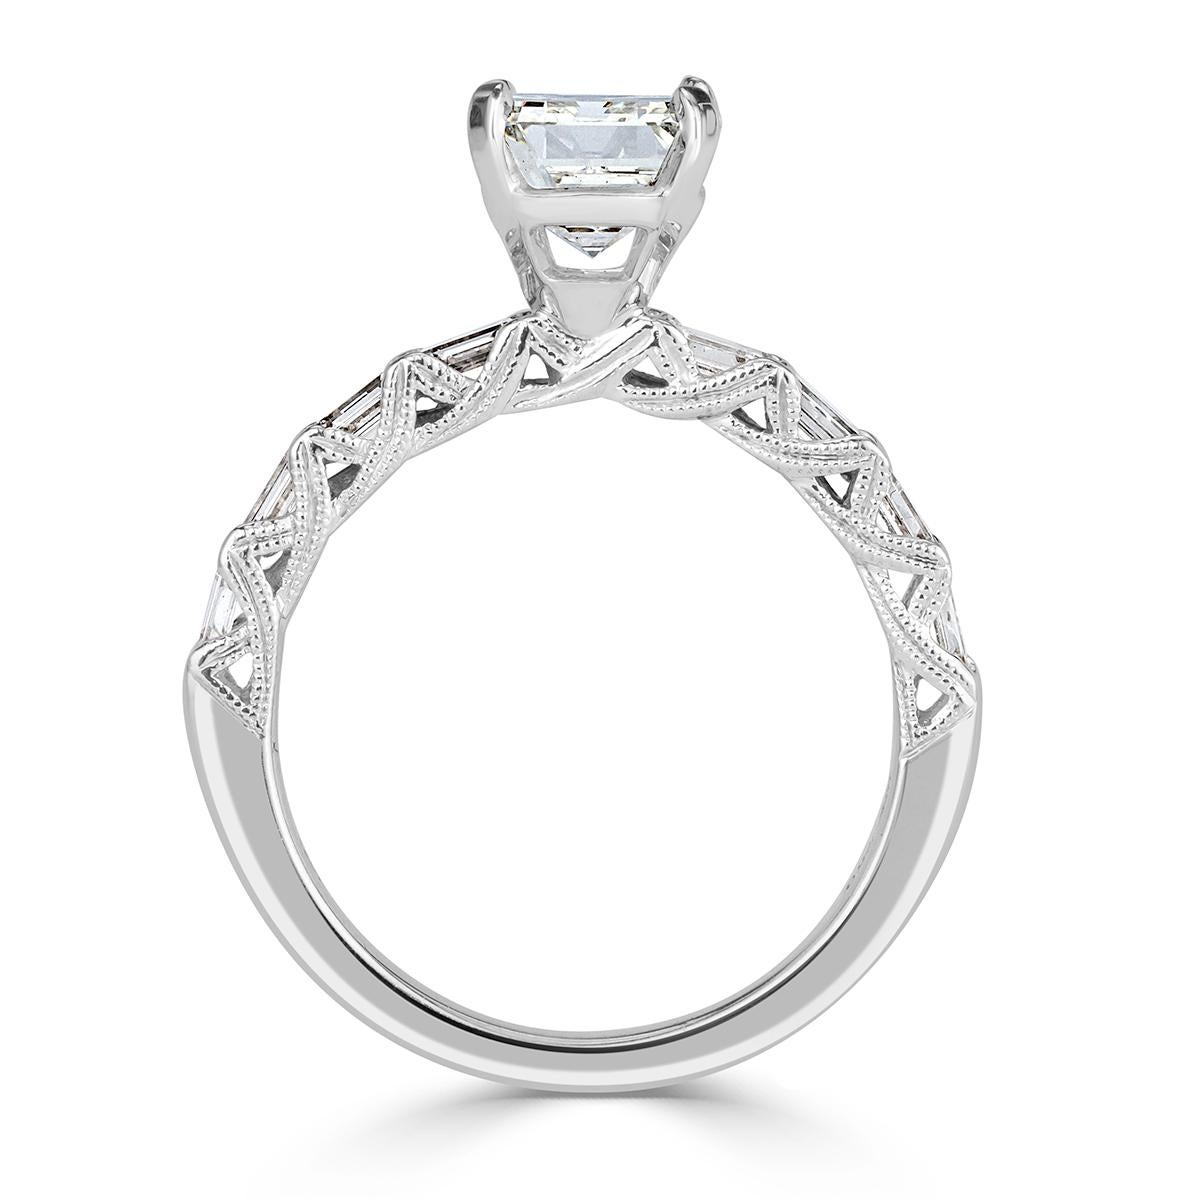 Women's or Men's Mark Broumand 2.70 Carat Emerald Cut Diamond Engagement Ring